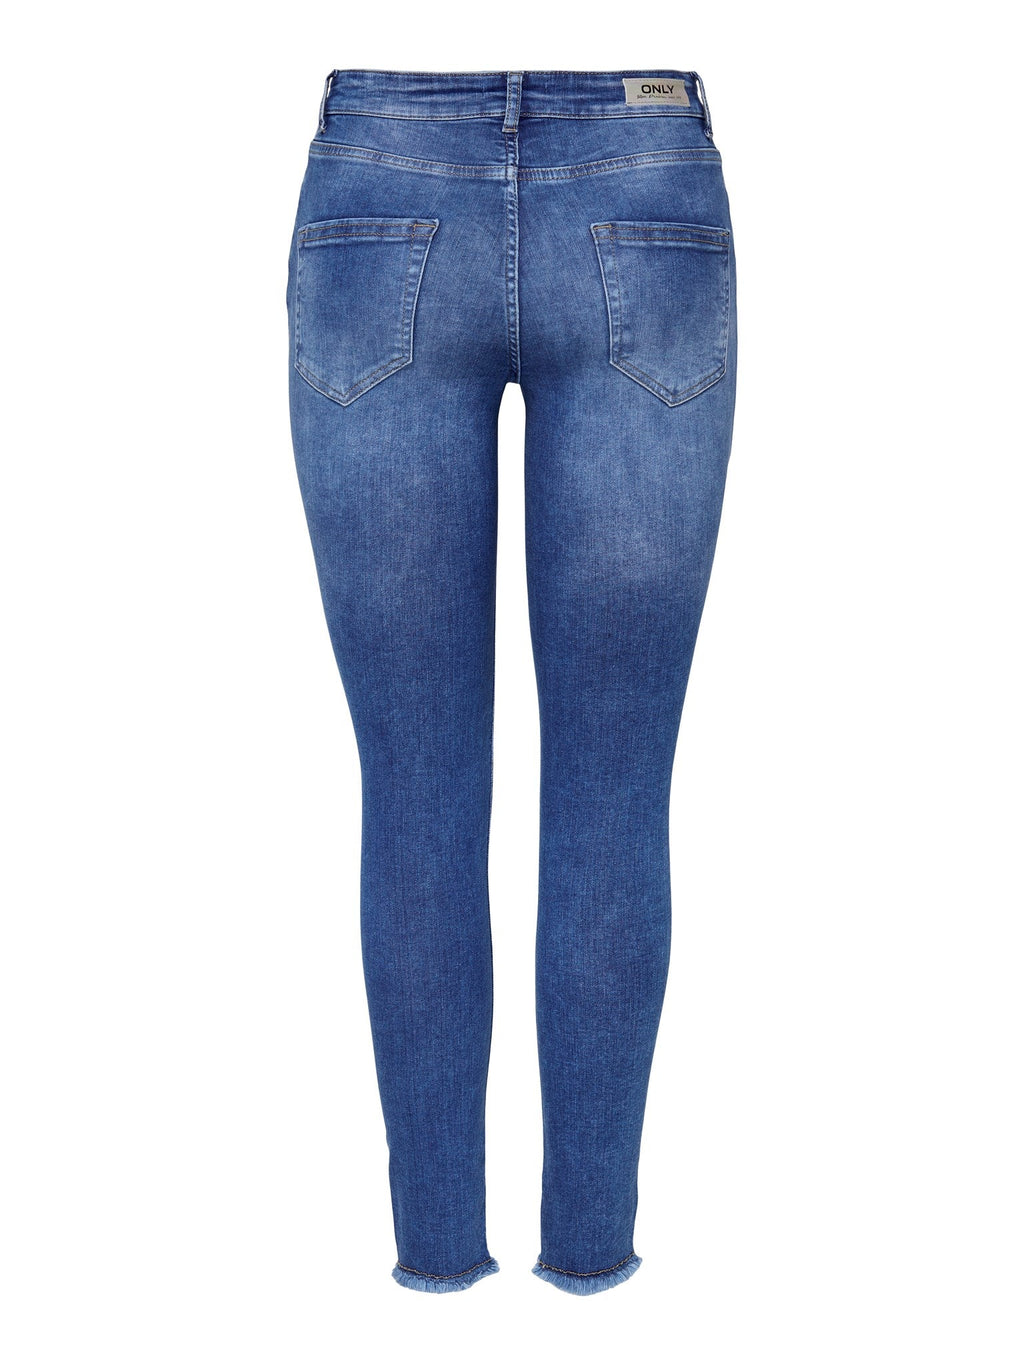 Blush Midsk Jeans - Medium Blue